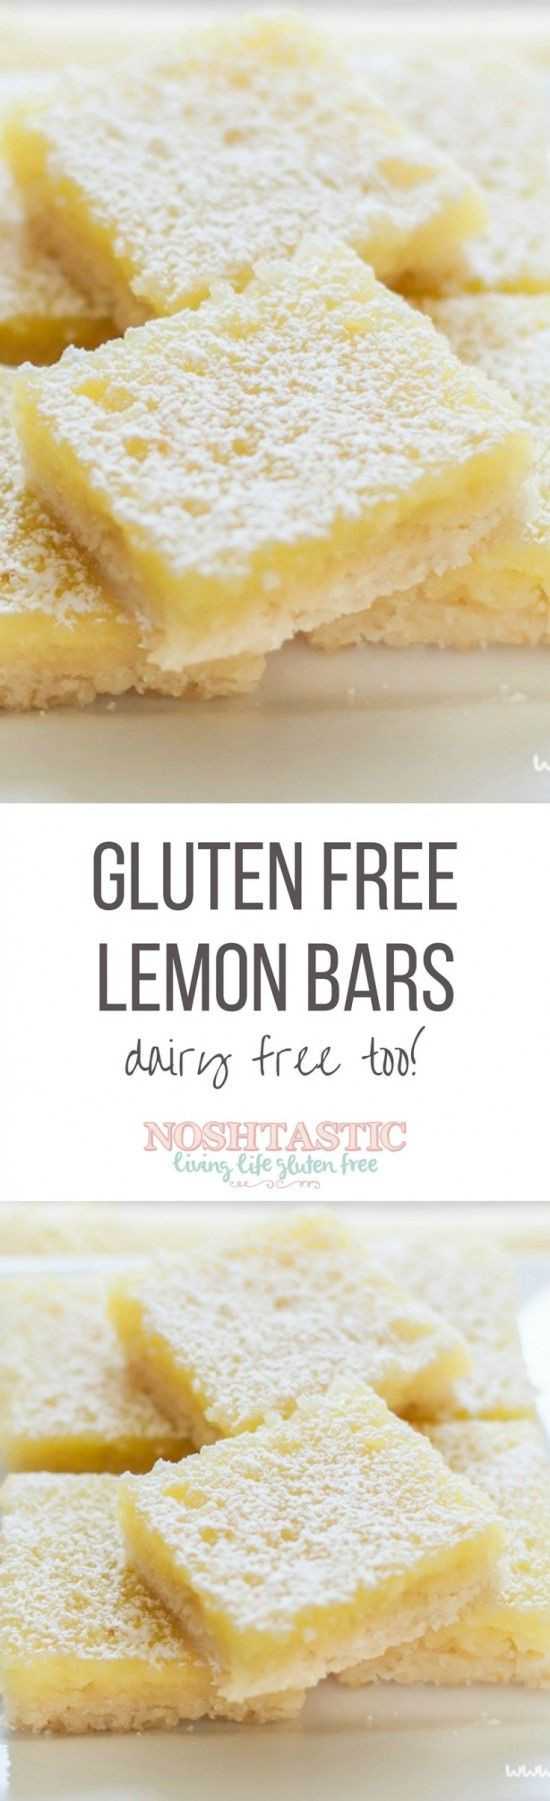 Dairy Free Desserts To Buy
 Lemon Bars Gluten Free Recipe